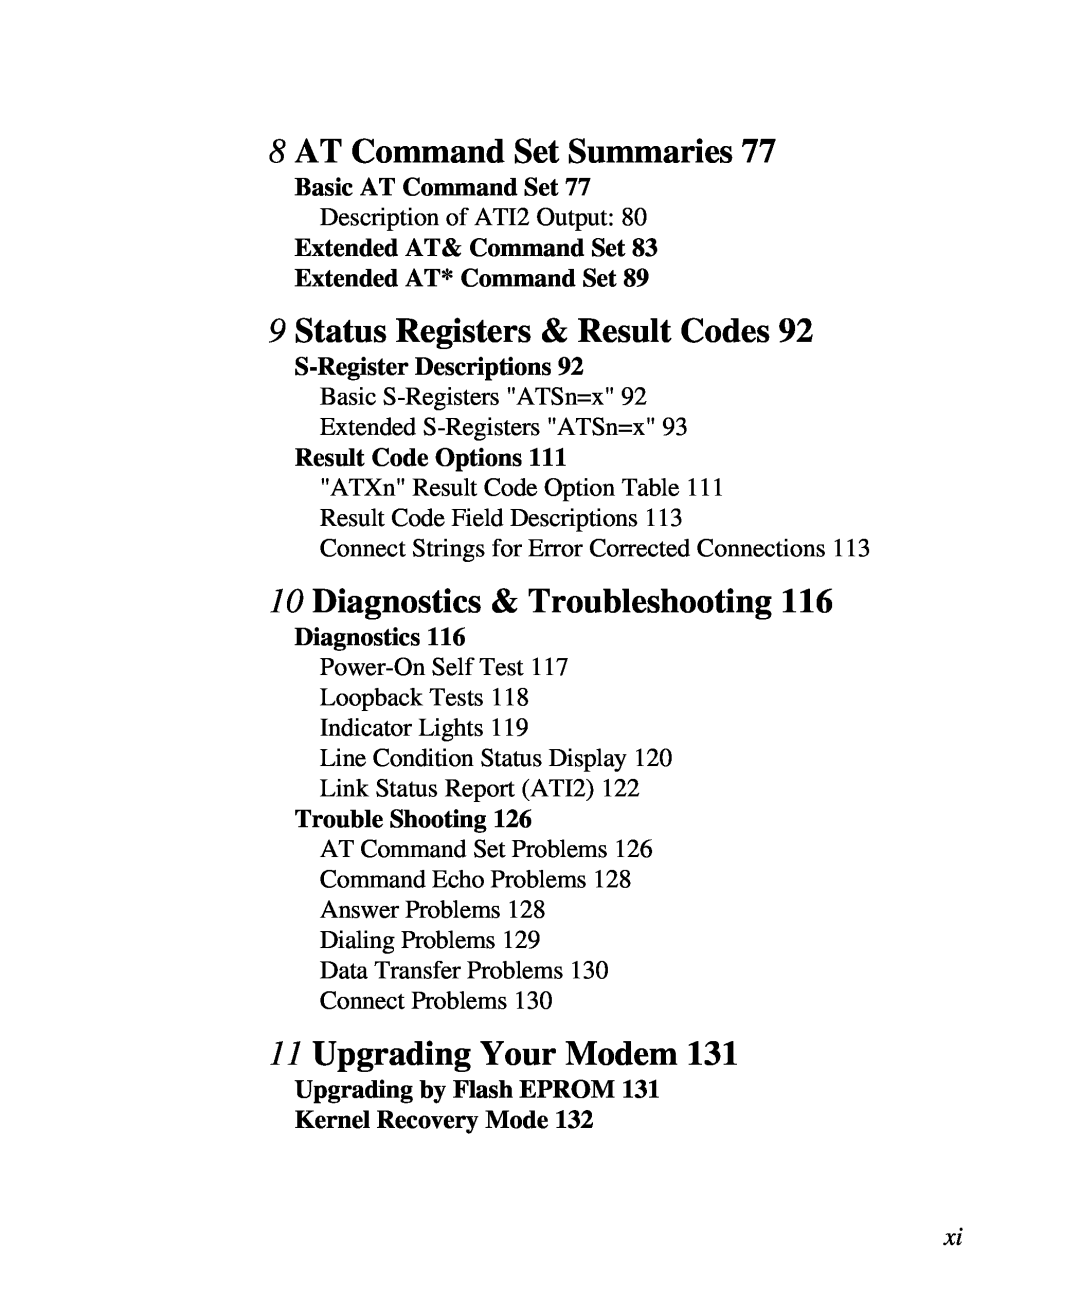 ZyXEL Communications U-336R/RE AT Command Set Summaries, Status Registers & Result Codes, Diagnostics & Troubleshooting 